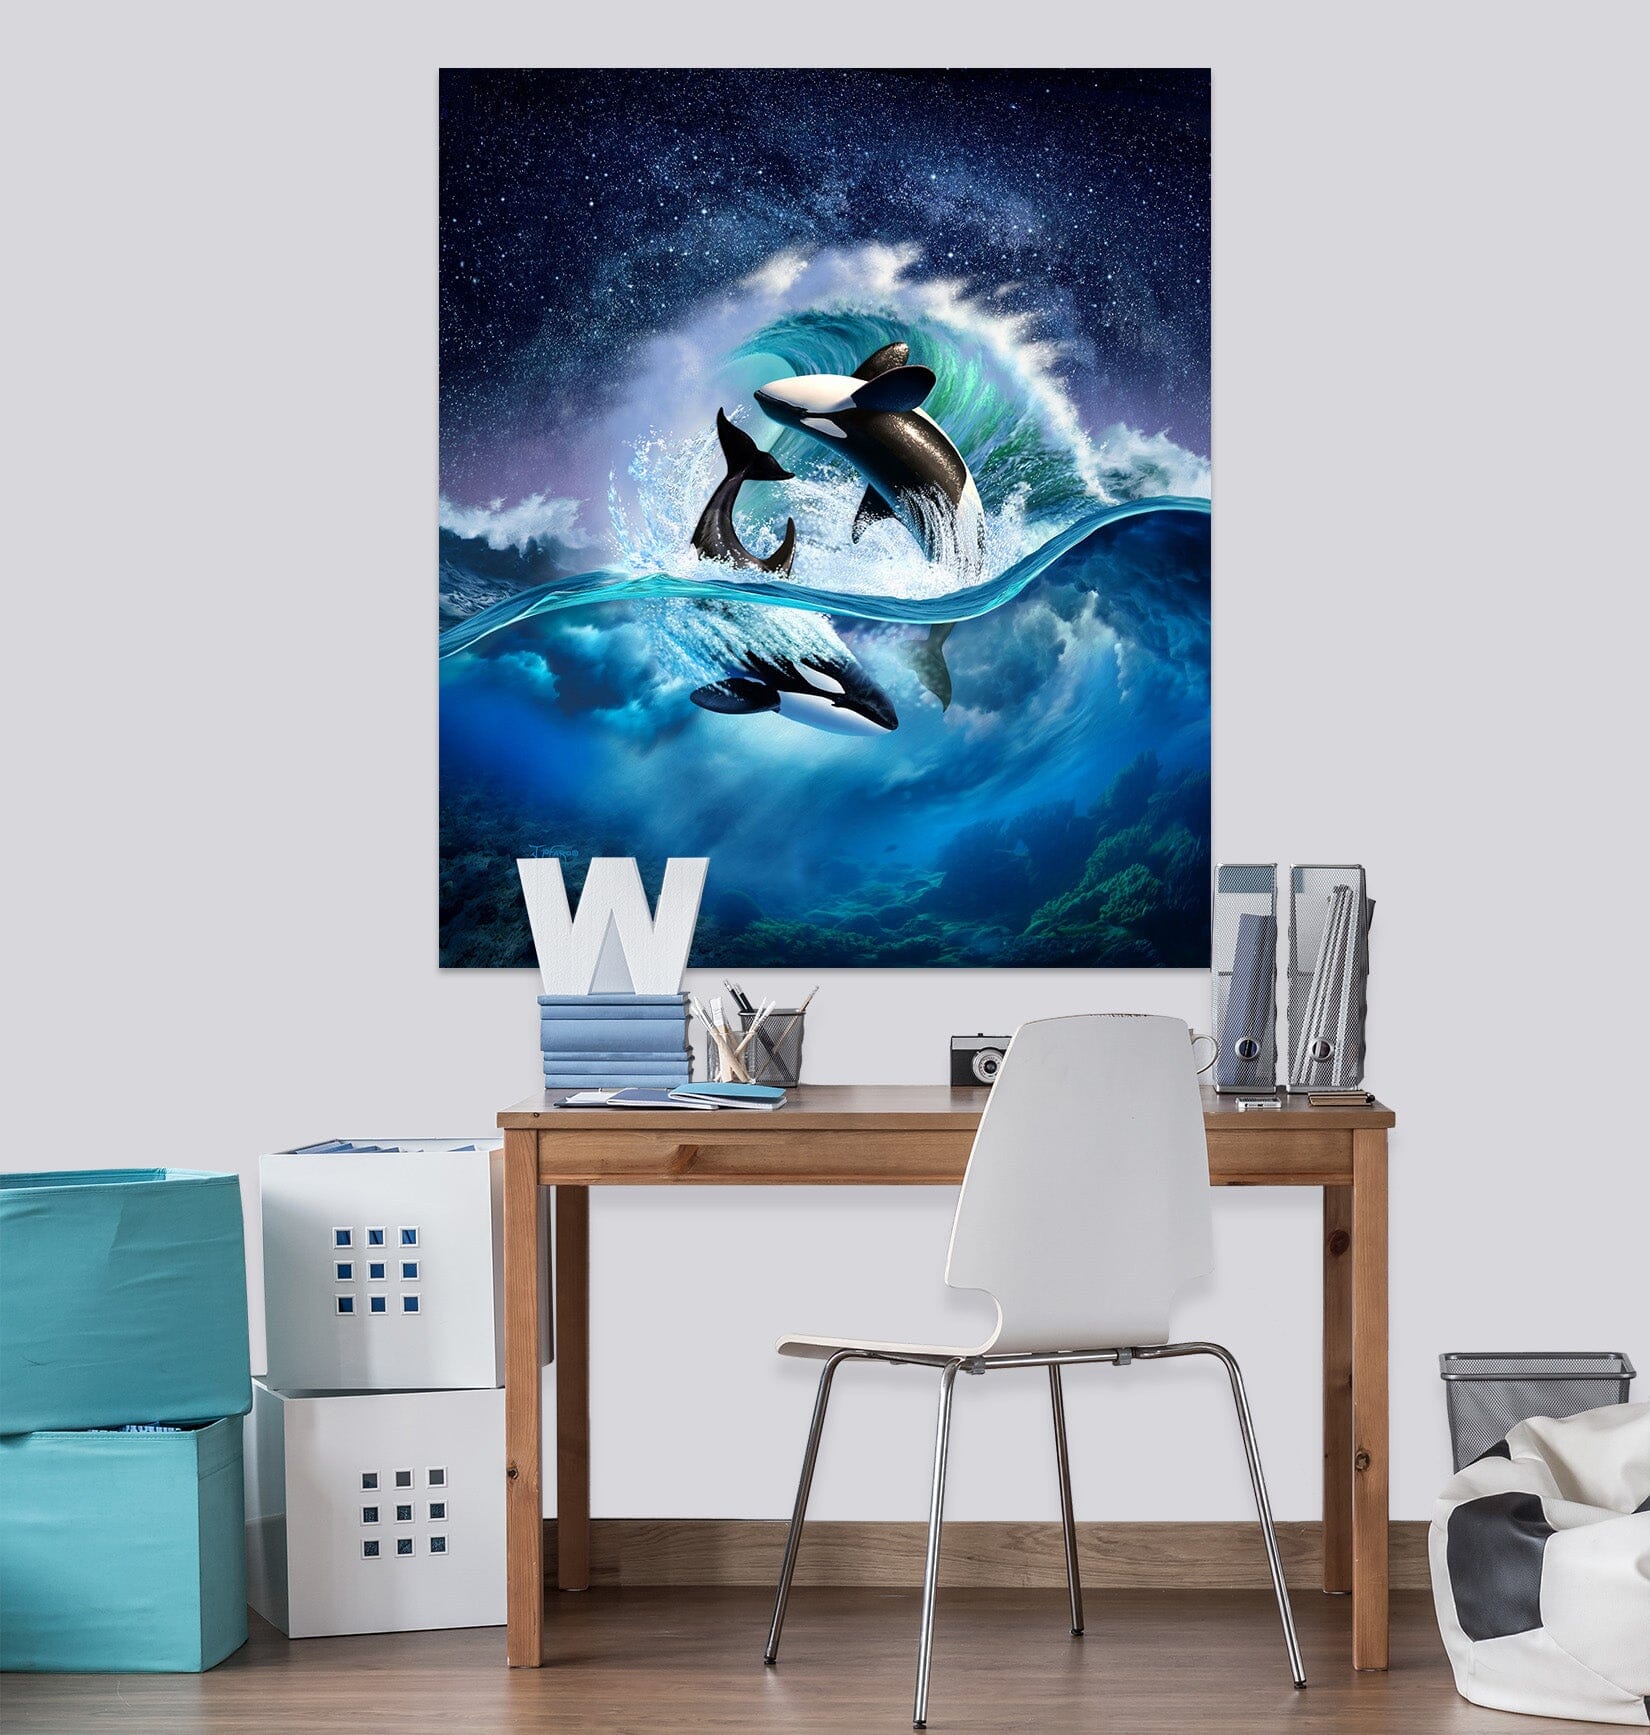 3D Orca Wave 017 Jerry LoFaro Wall Sticker Wallpaper AJ Wallpaper 2 